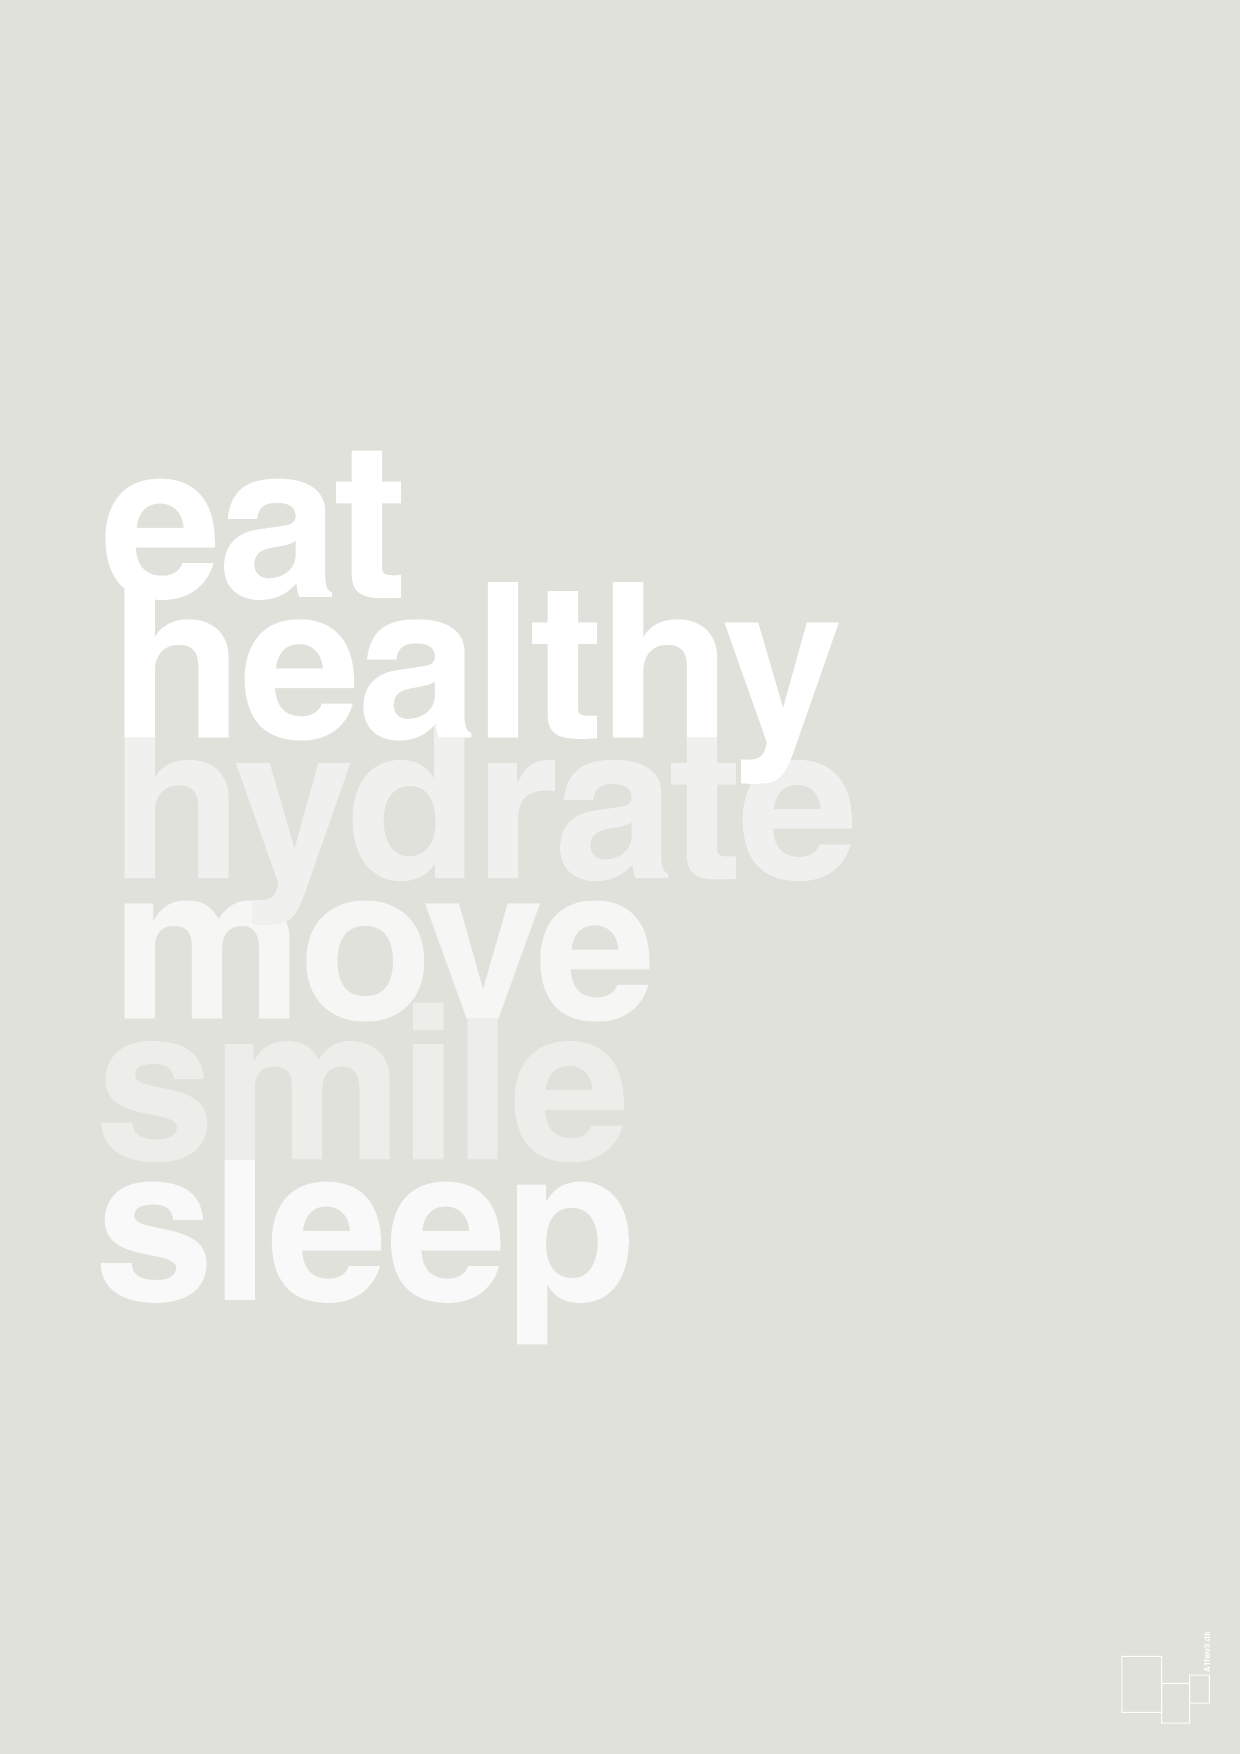 eat healthy hydrate move smile sleep - Plakat med Ordsprog i Painters White